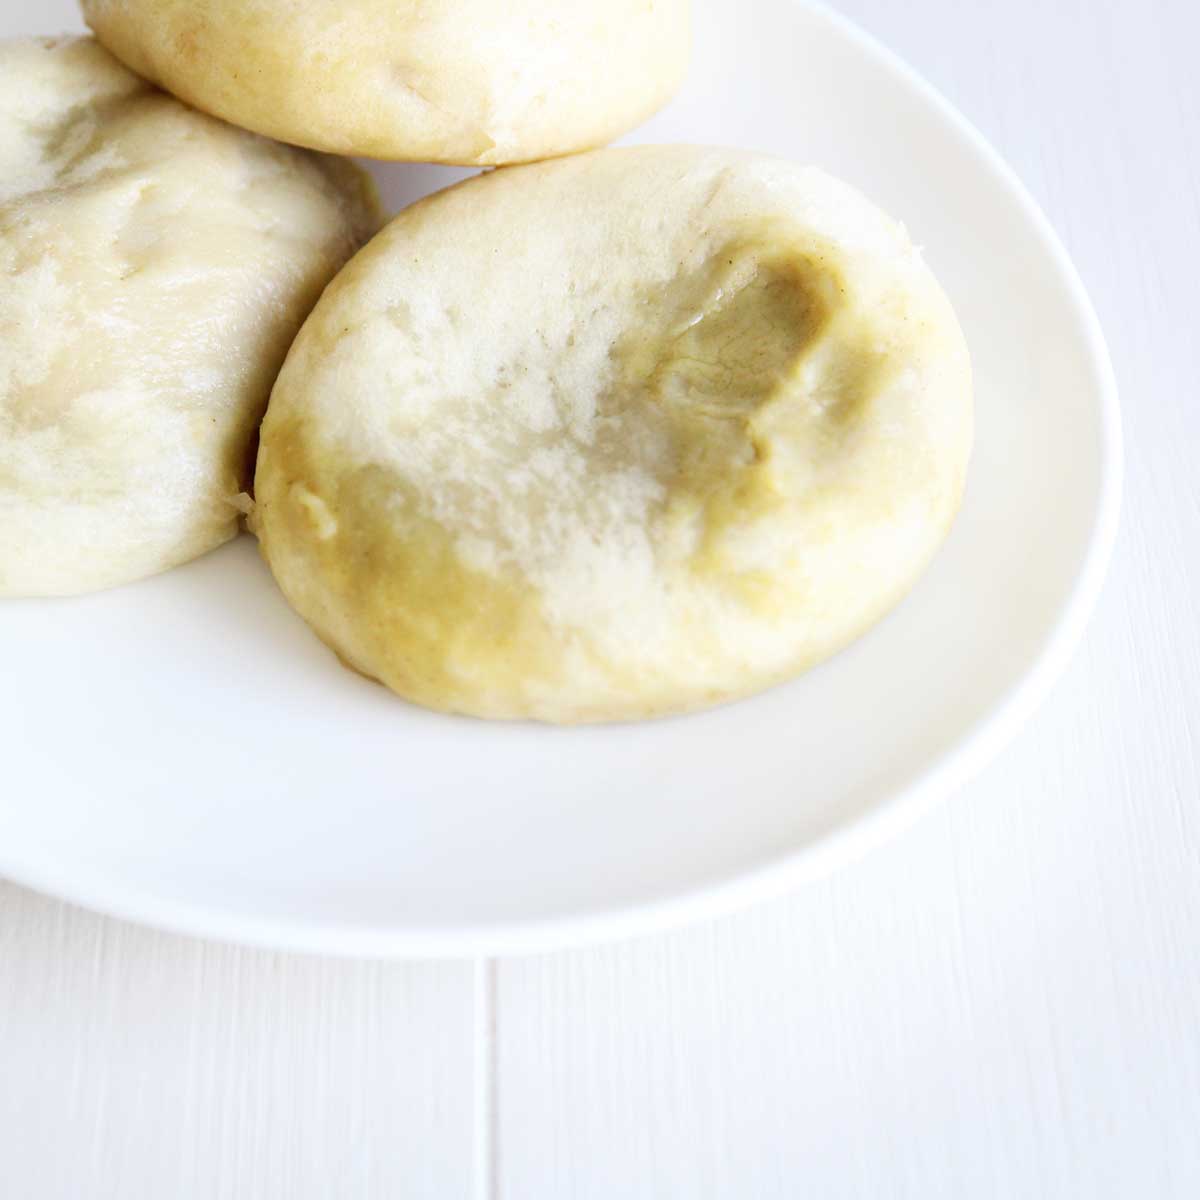 Coconut Cream Steamed Buns with a Vegan Pistachio Custard Filling - Sticky Rice Potato Dumplings